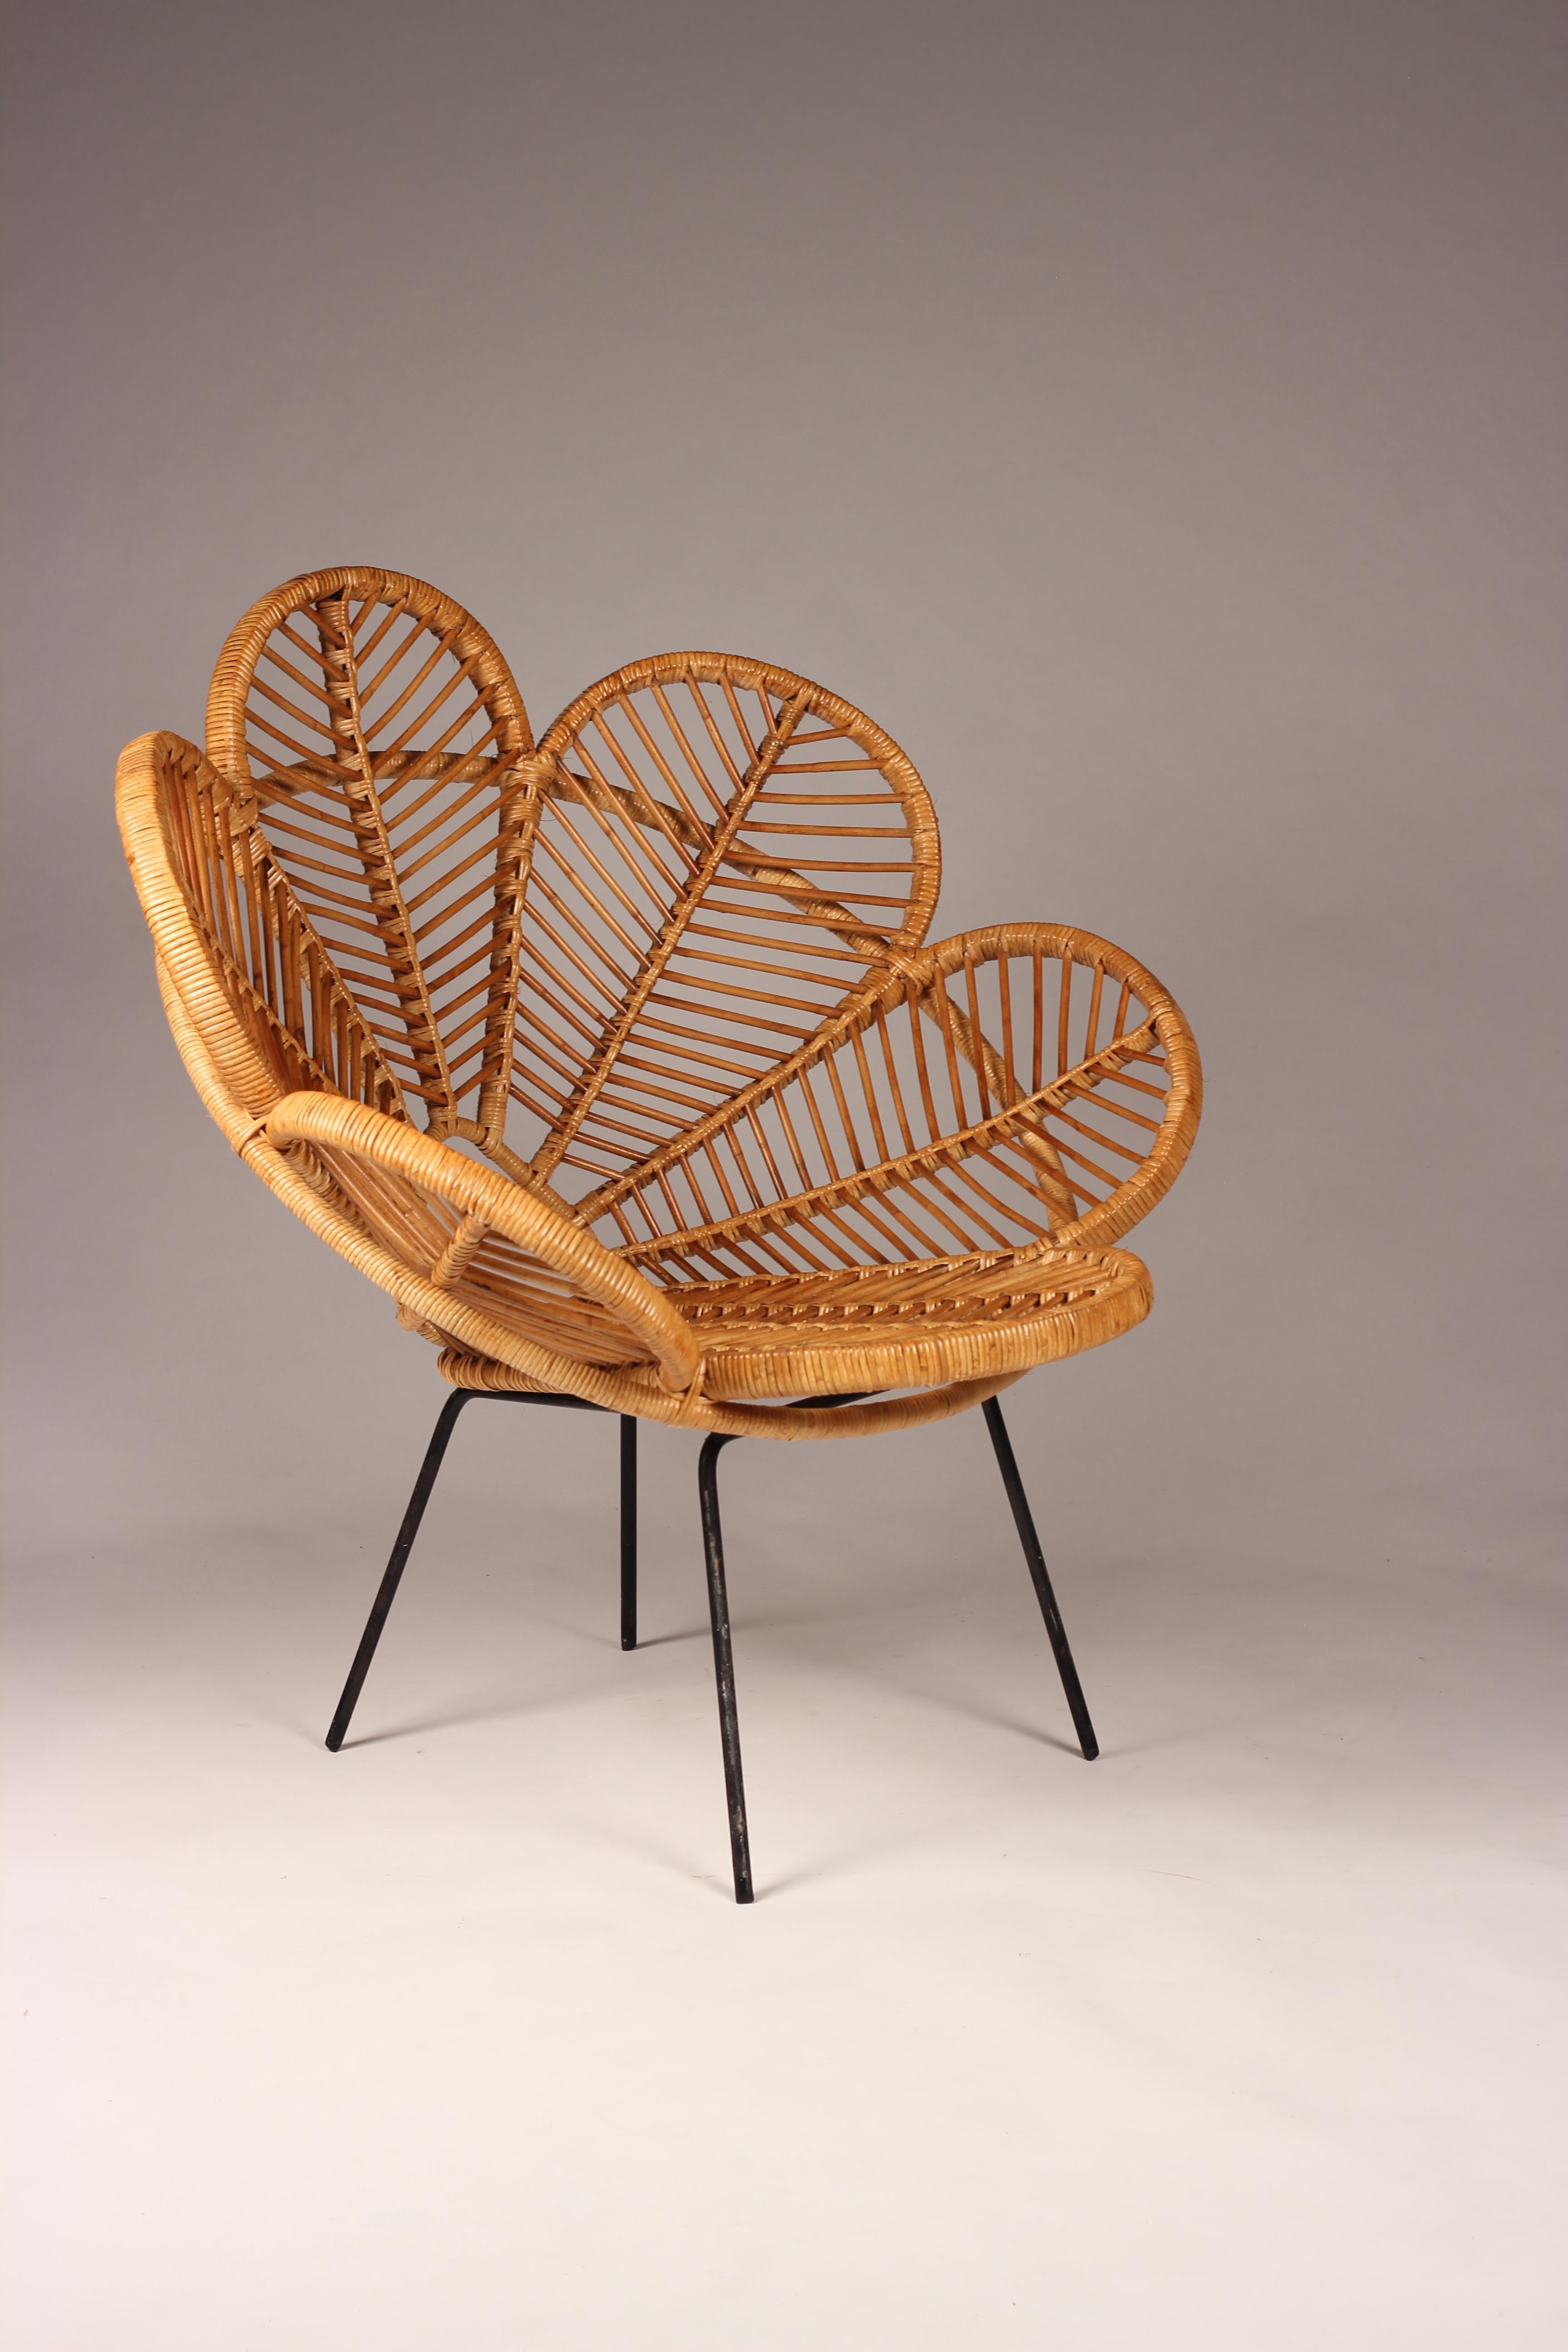 Metal Cane, Wicker and Raffia Flower garden Chairs Mid Century French Design